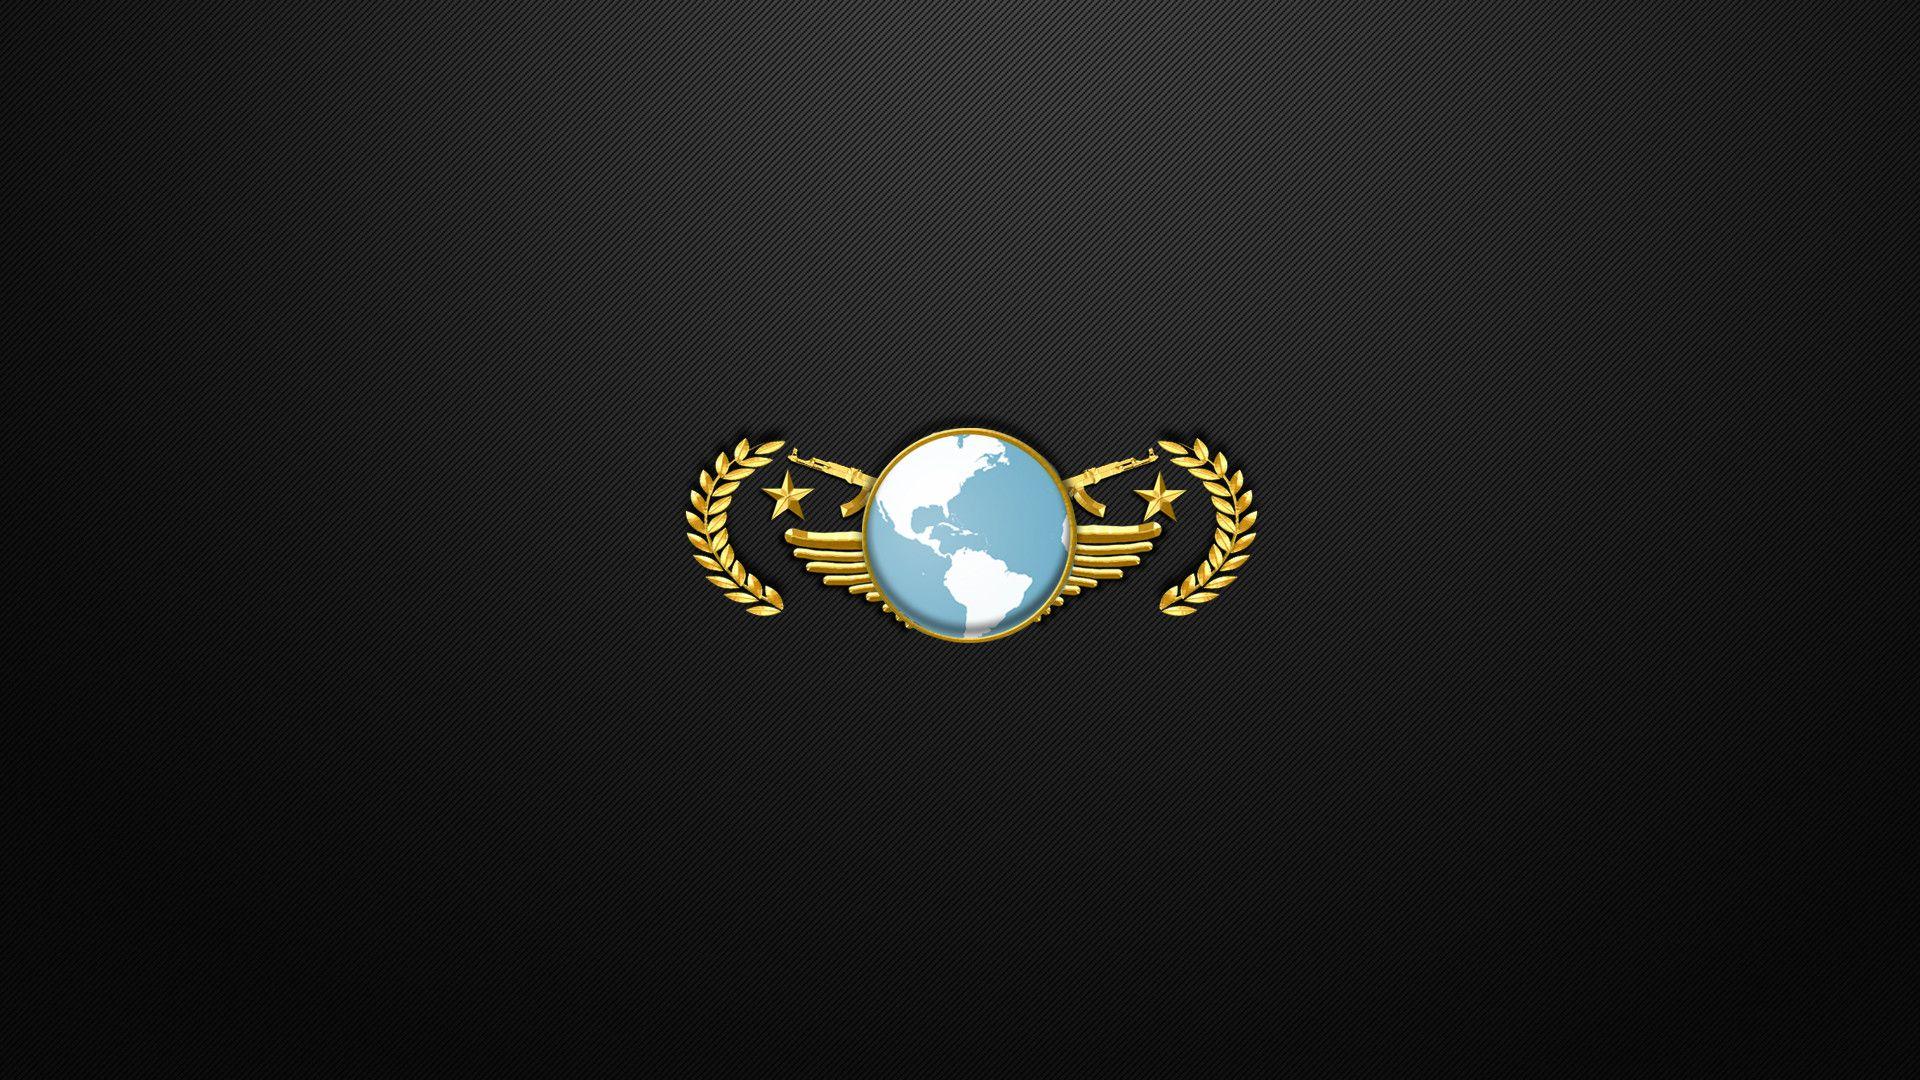 Global HD Logo - 105 Amazing CS:GO Wallpapers (Background Images) | Skins.cash | Blog